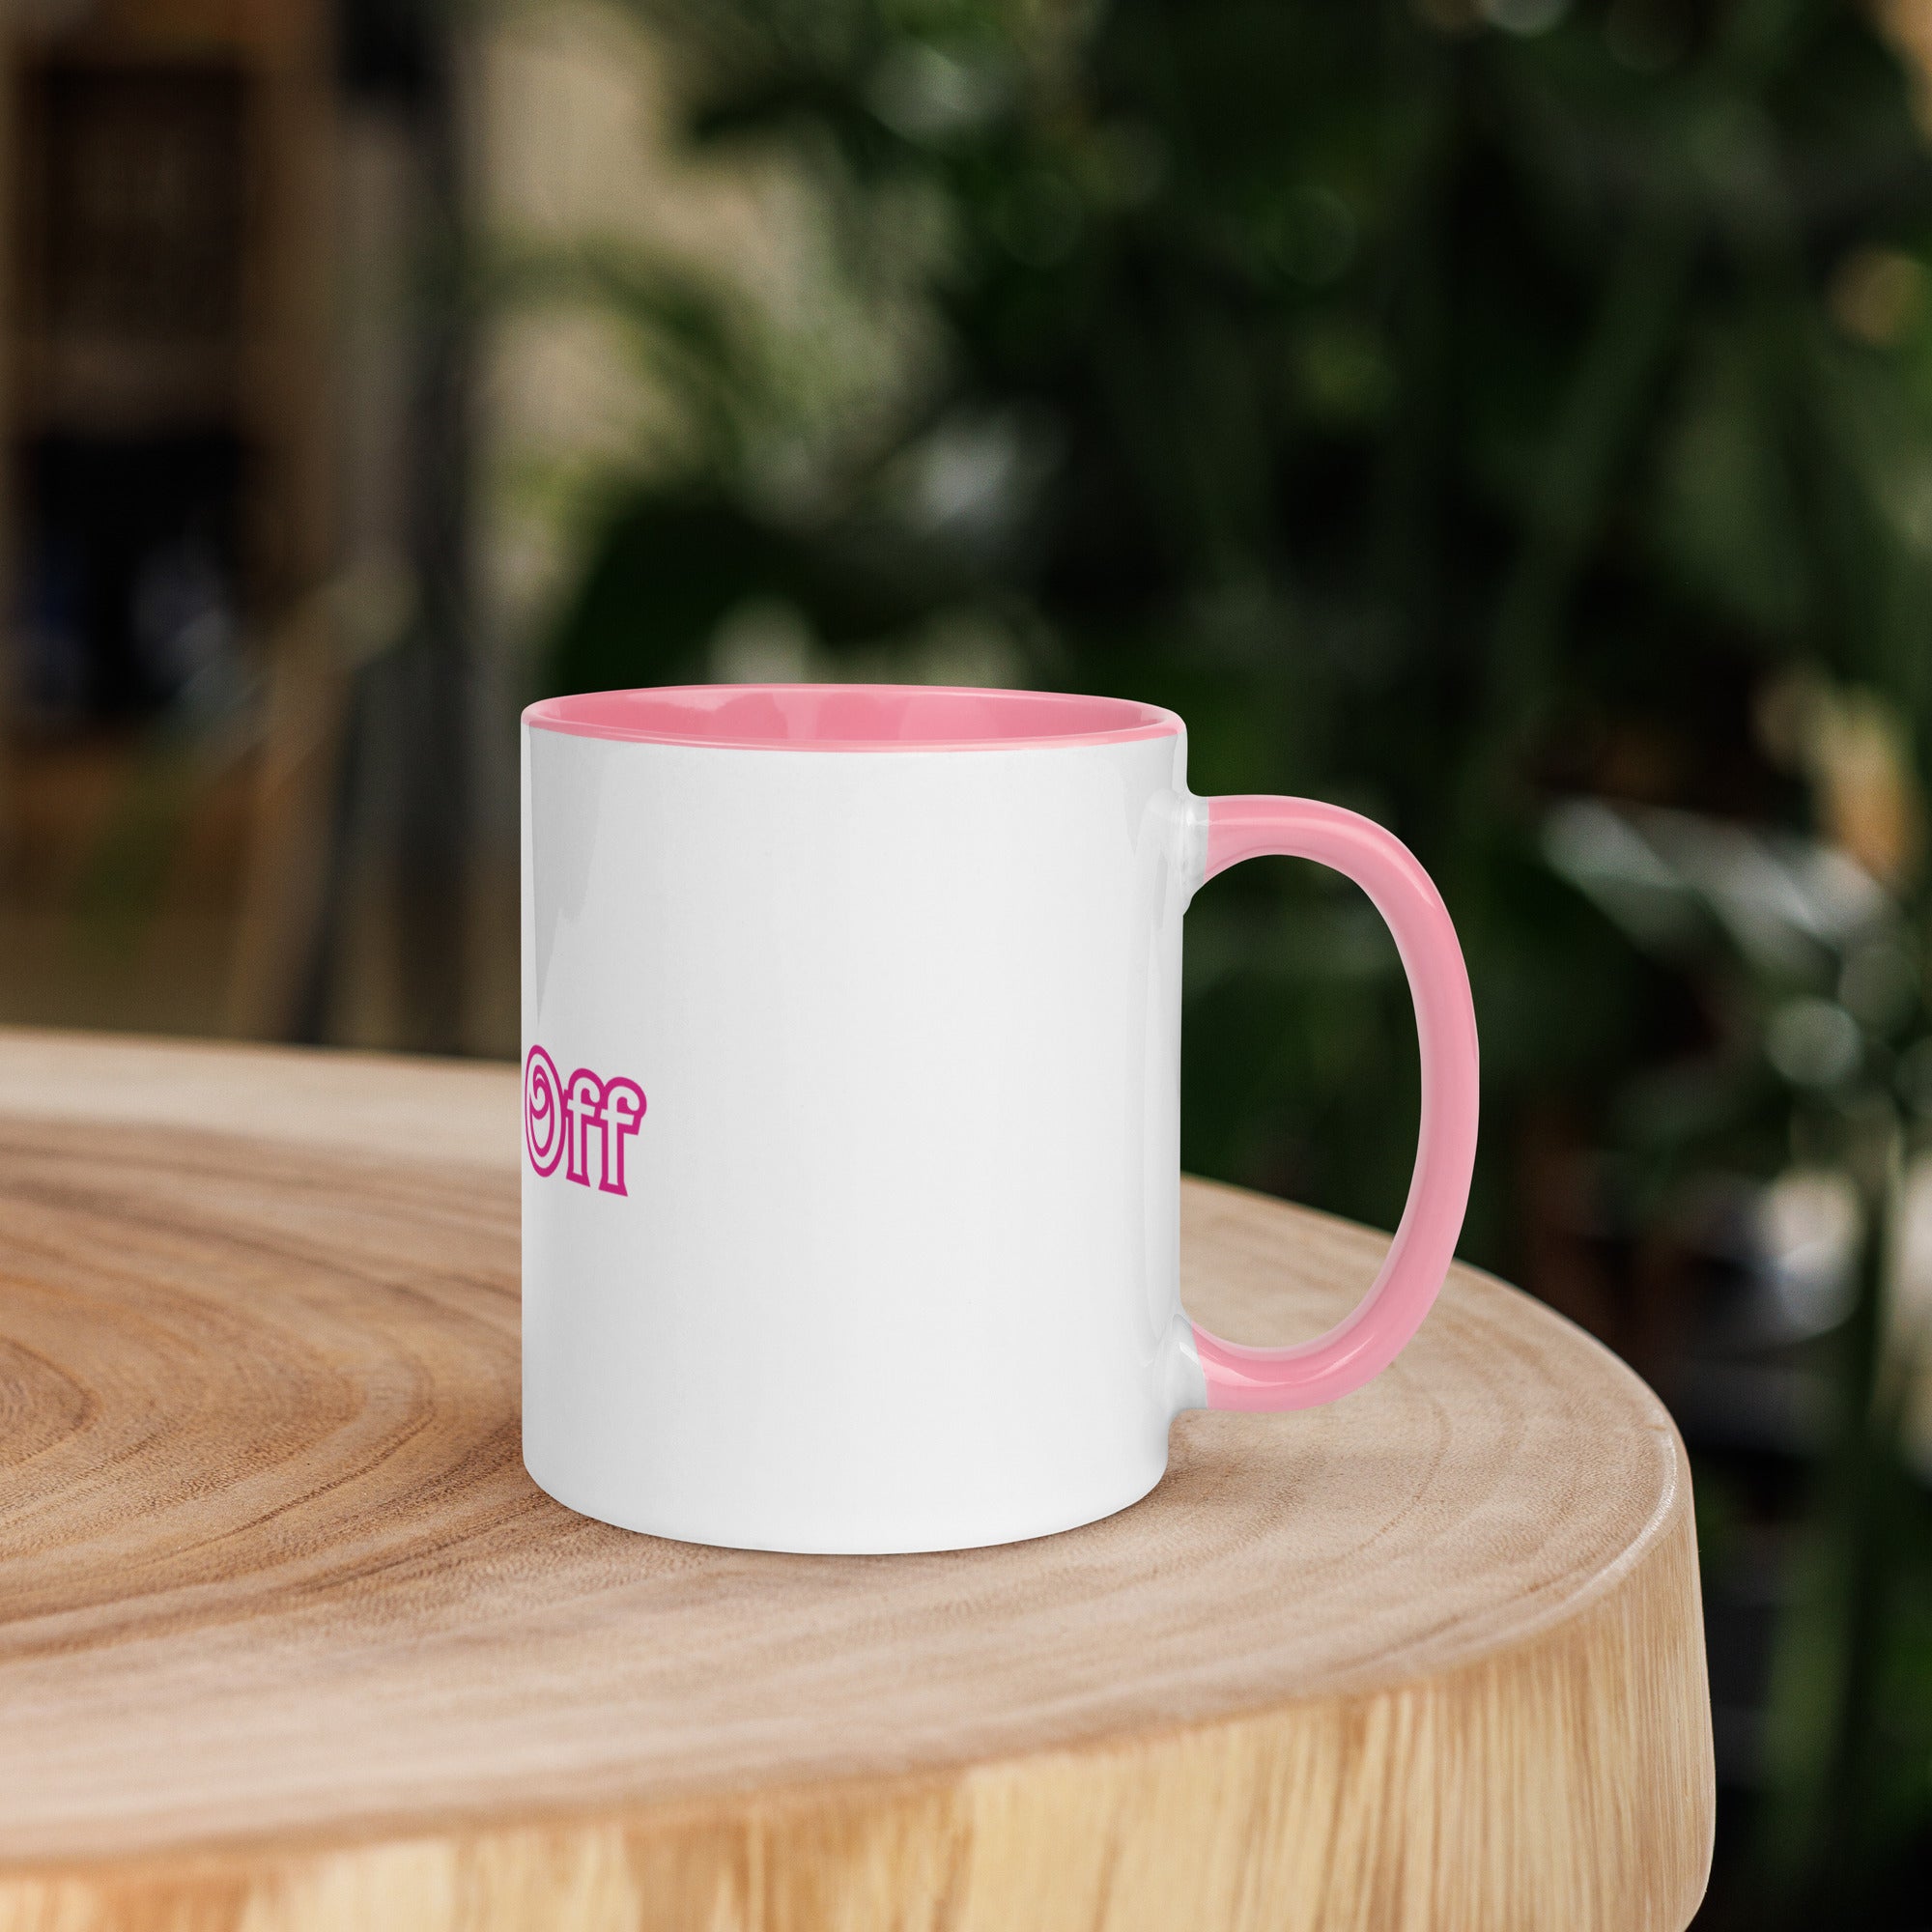 white-ceramic-mug-with-color-inside-pink-11-oz-right-65a9266007934.jpg